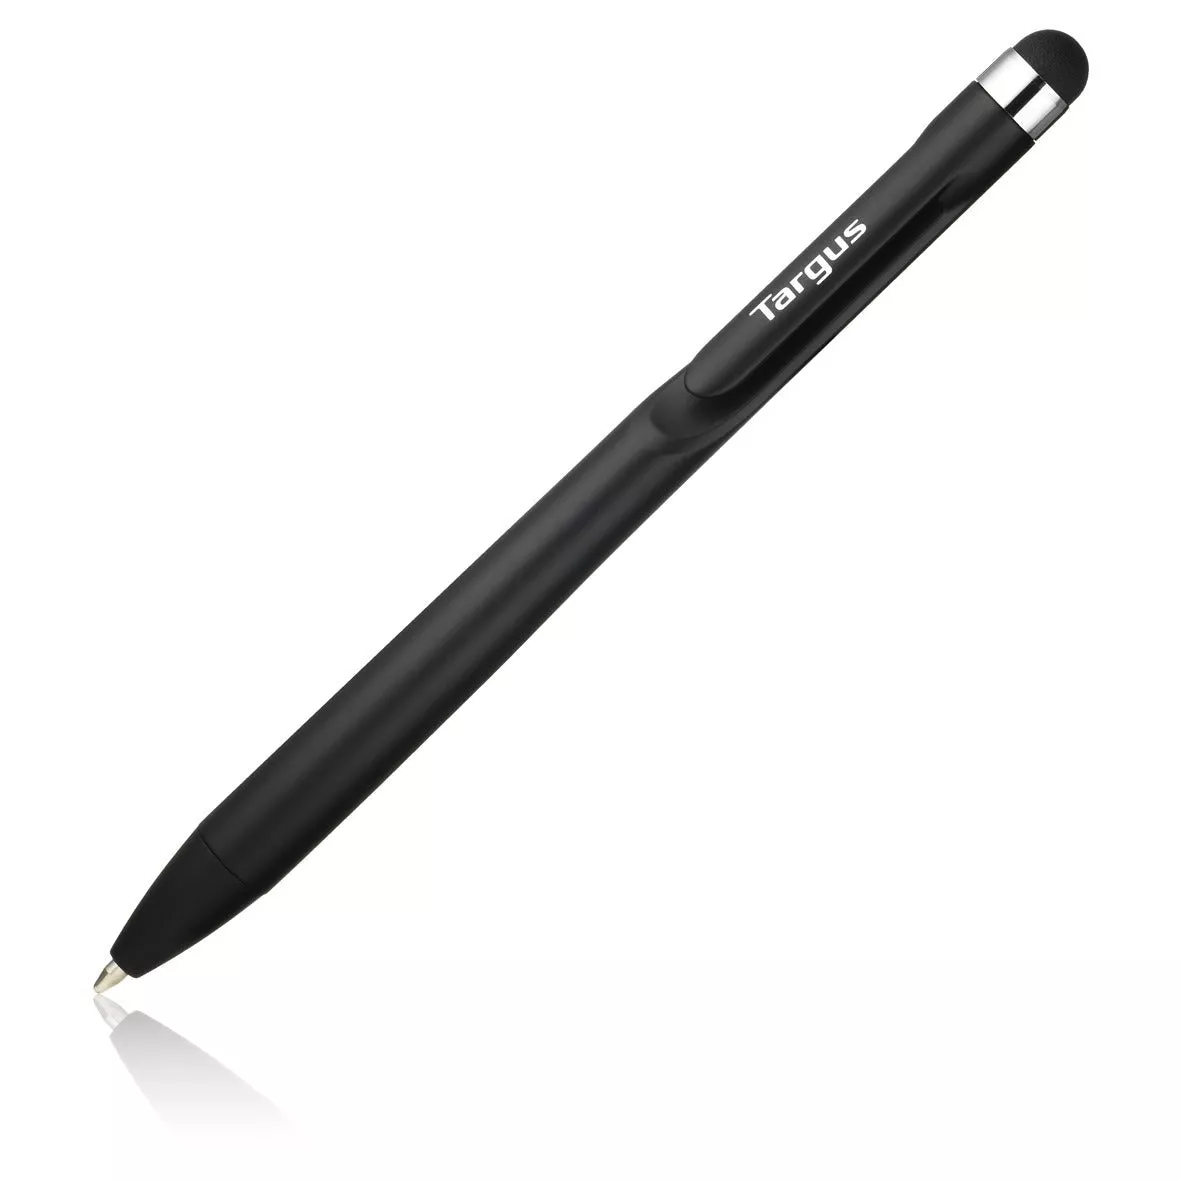 Vente TARGUS AntiMicrobial 2-in-1 Pen Stylus Black au meilleur prix